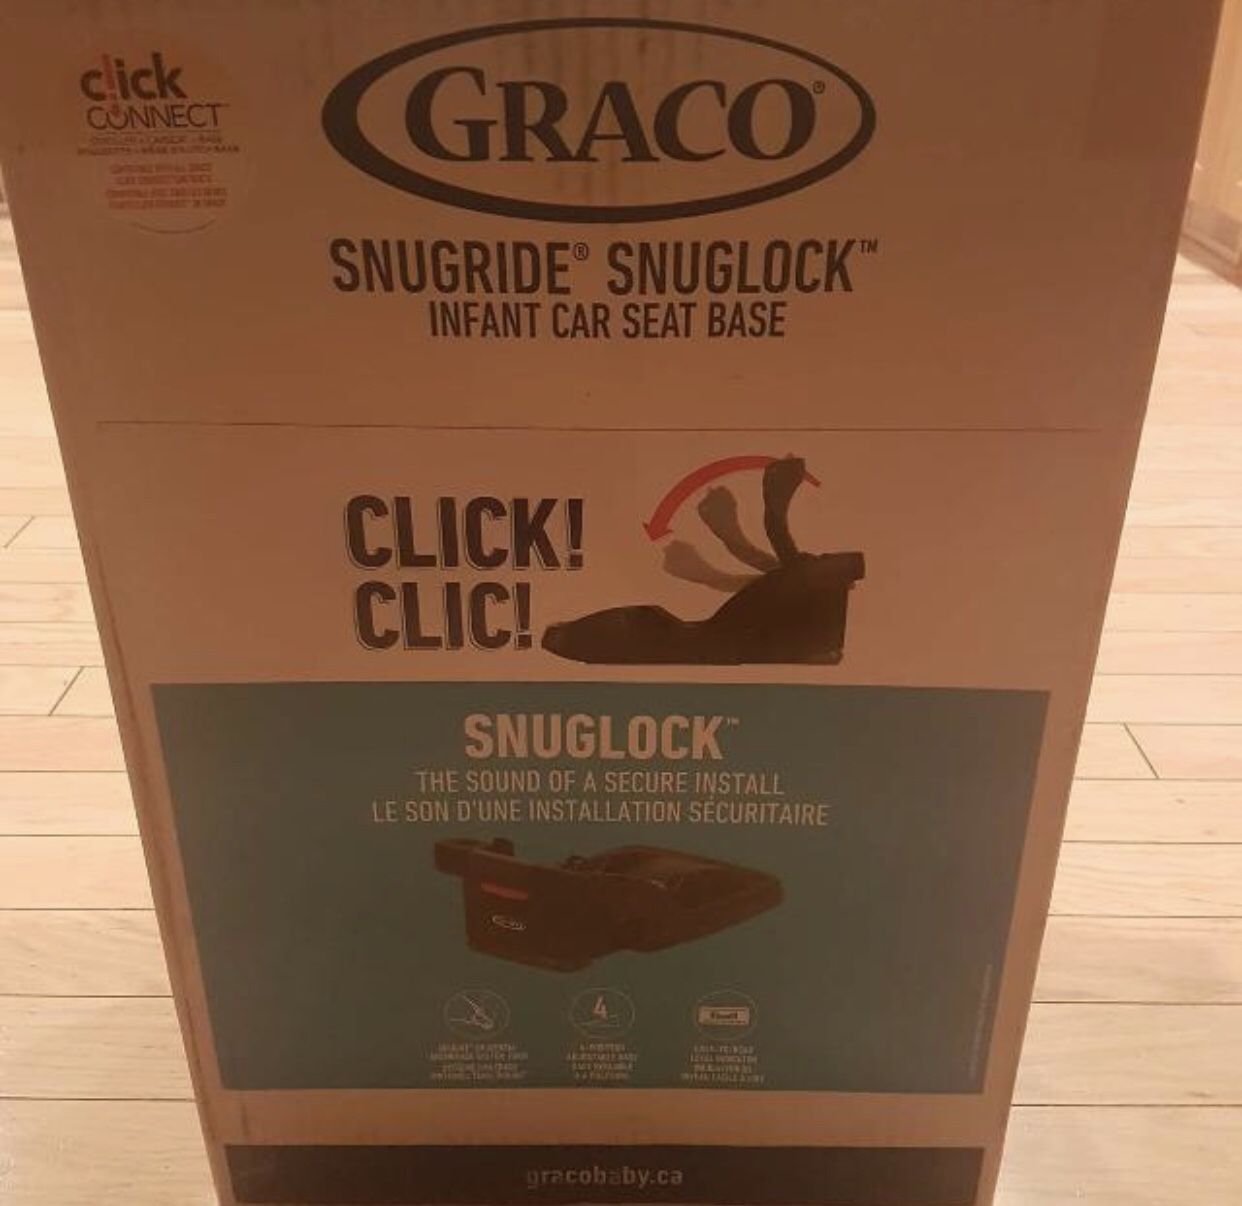 Snugride click connect Graco base. New in box